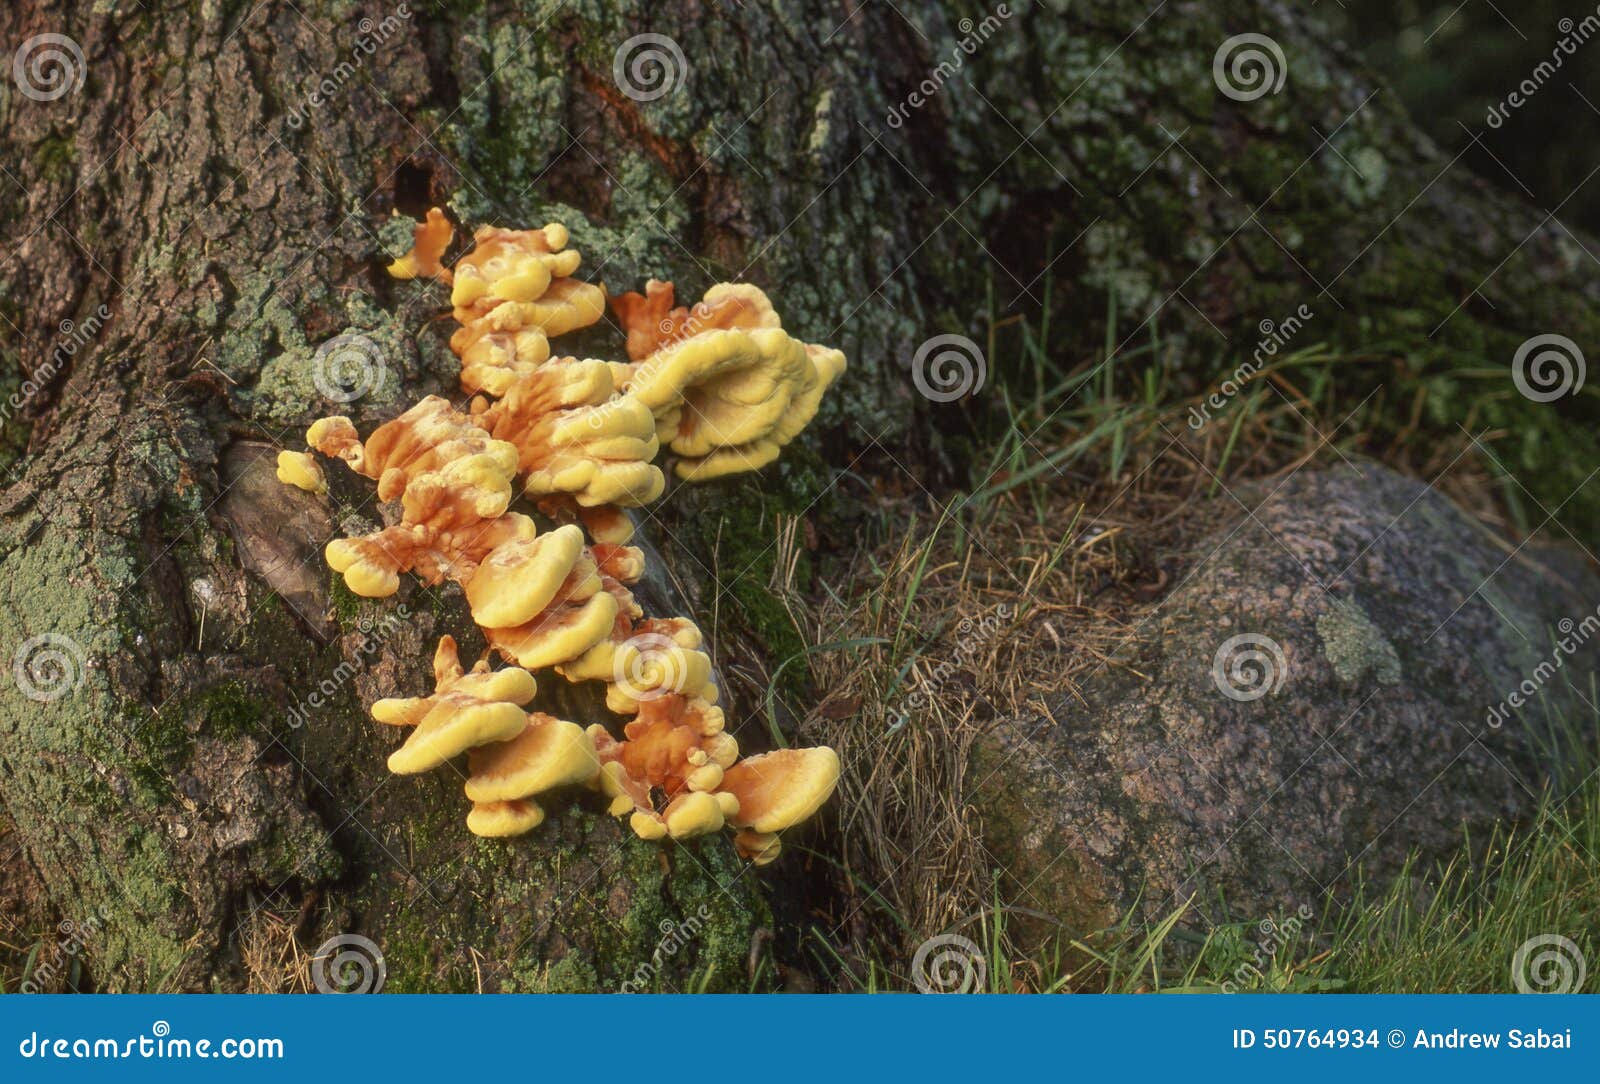 chicken of the woods mushroom (laetiporus sulphureus)